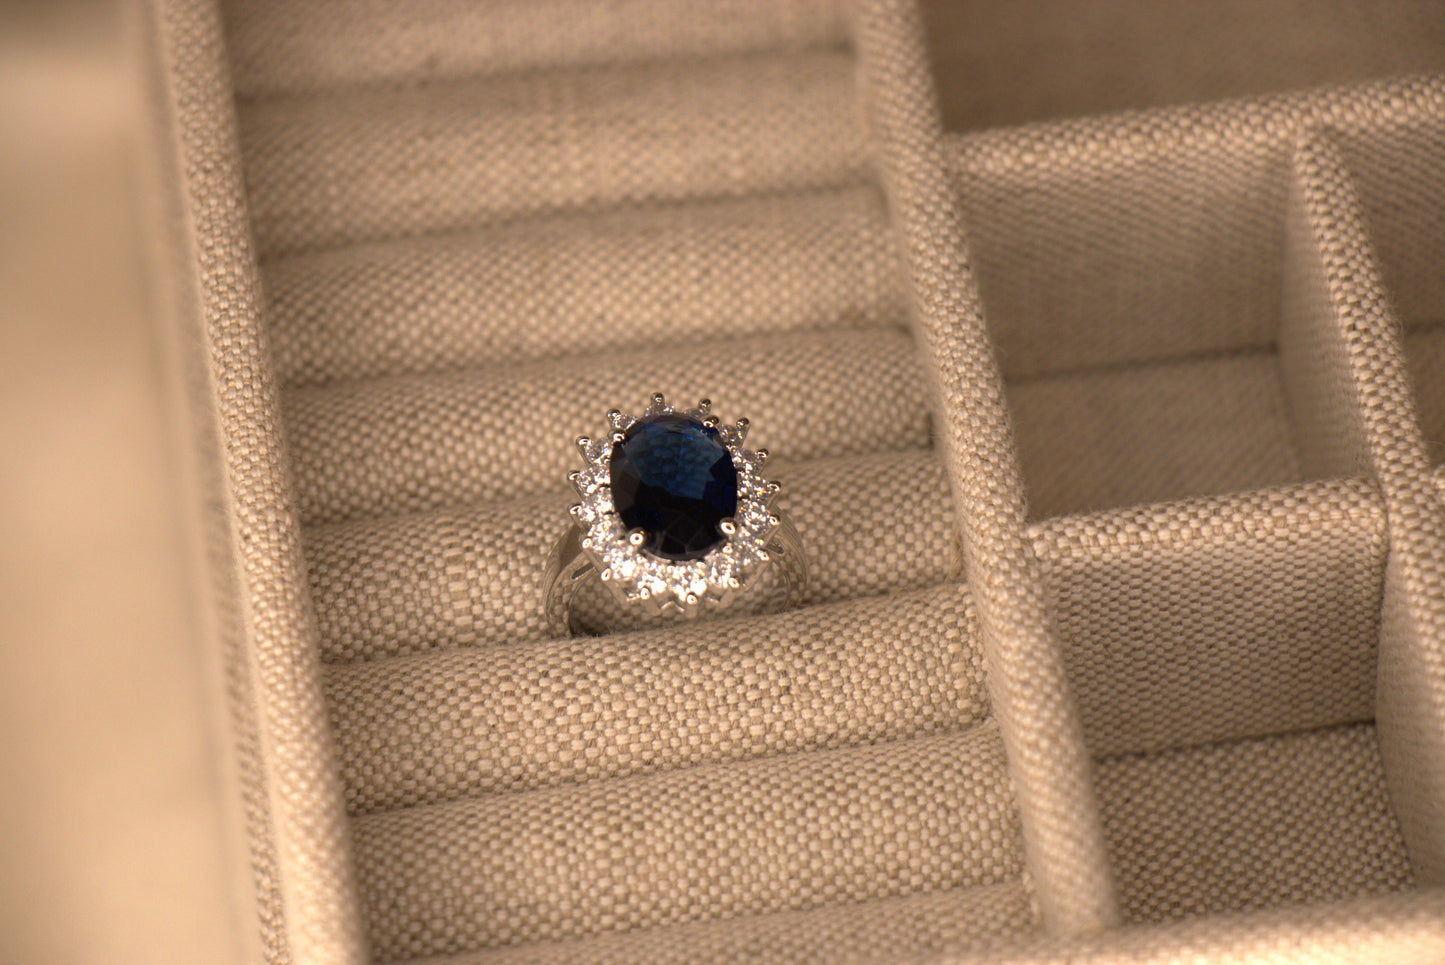 Princess Diana's Engagement Ring, Sapphire, 6 Carats